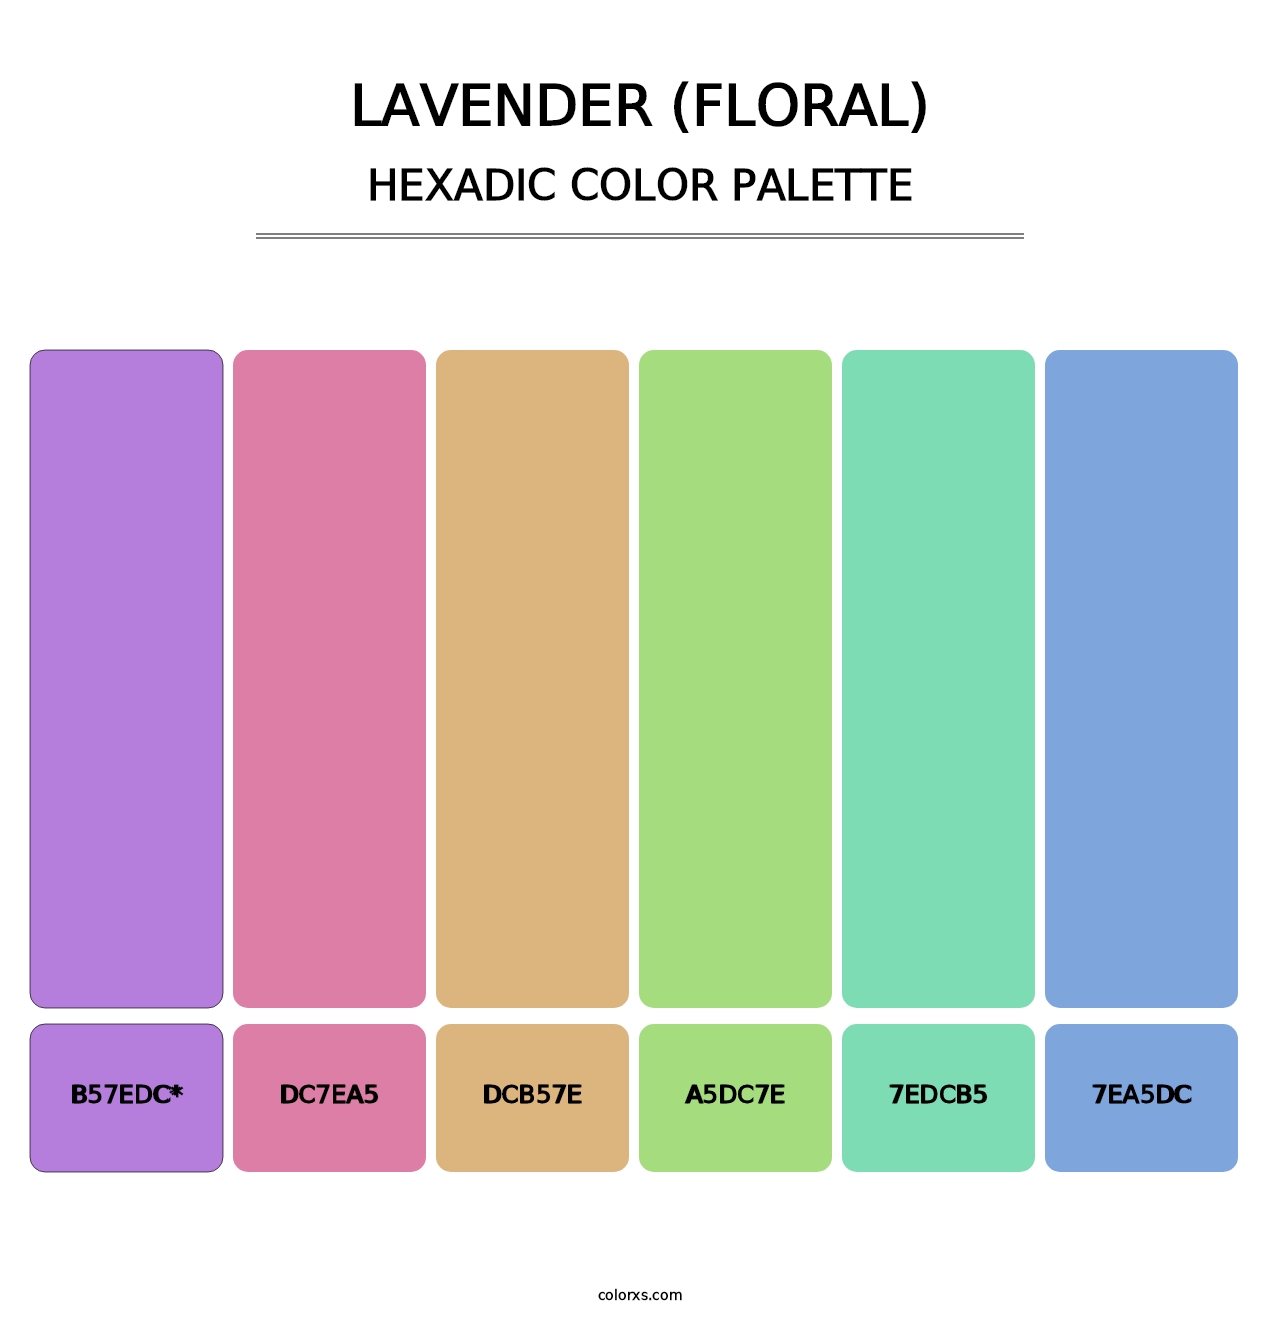 Lavender (Floral) - Hexadic Color Palette